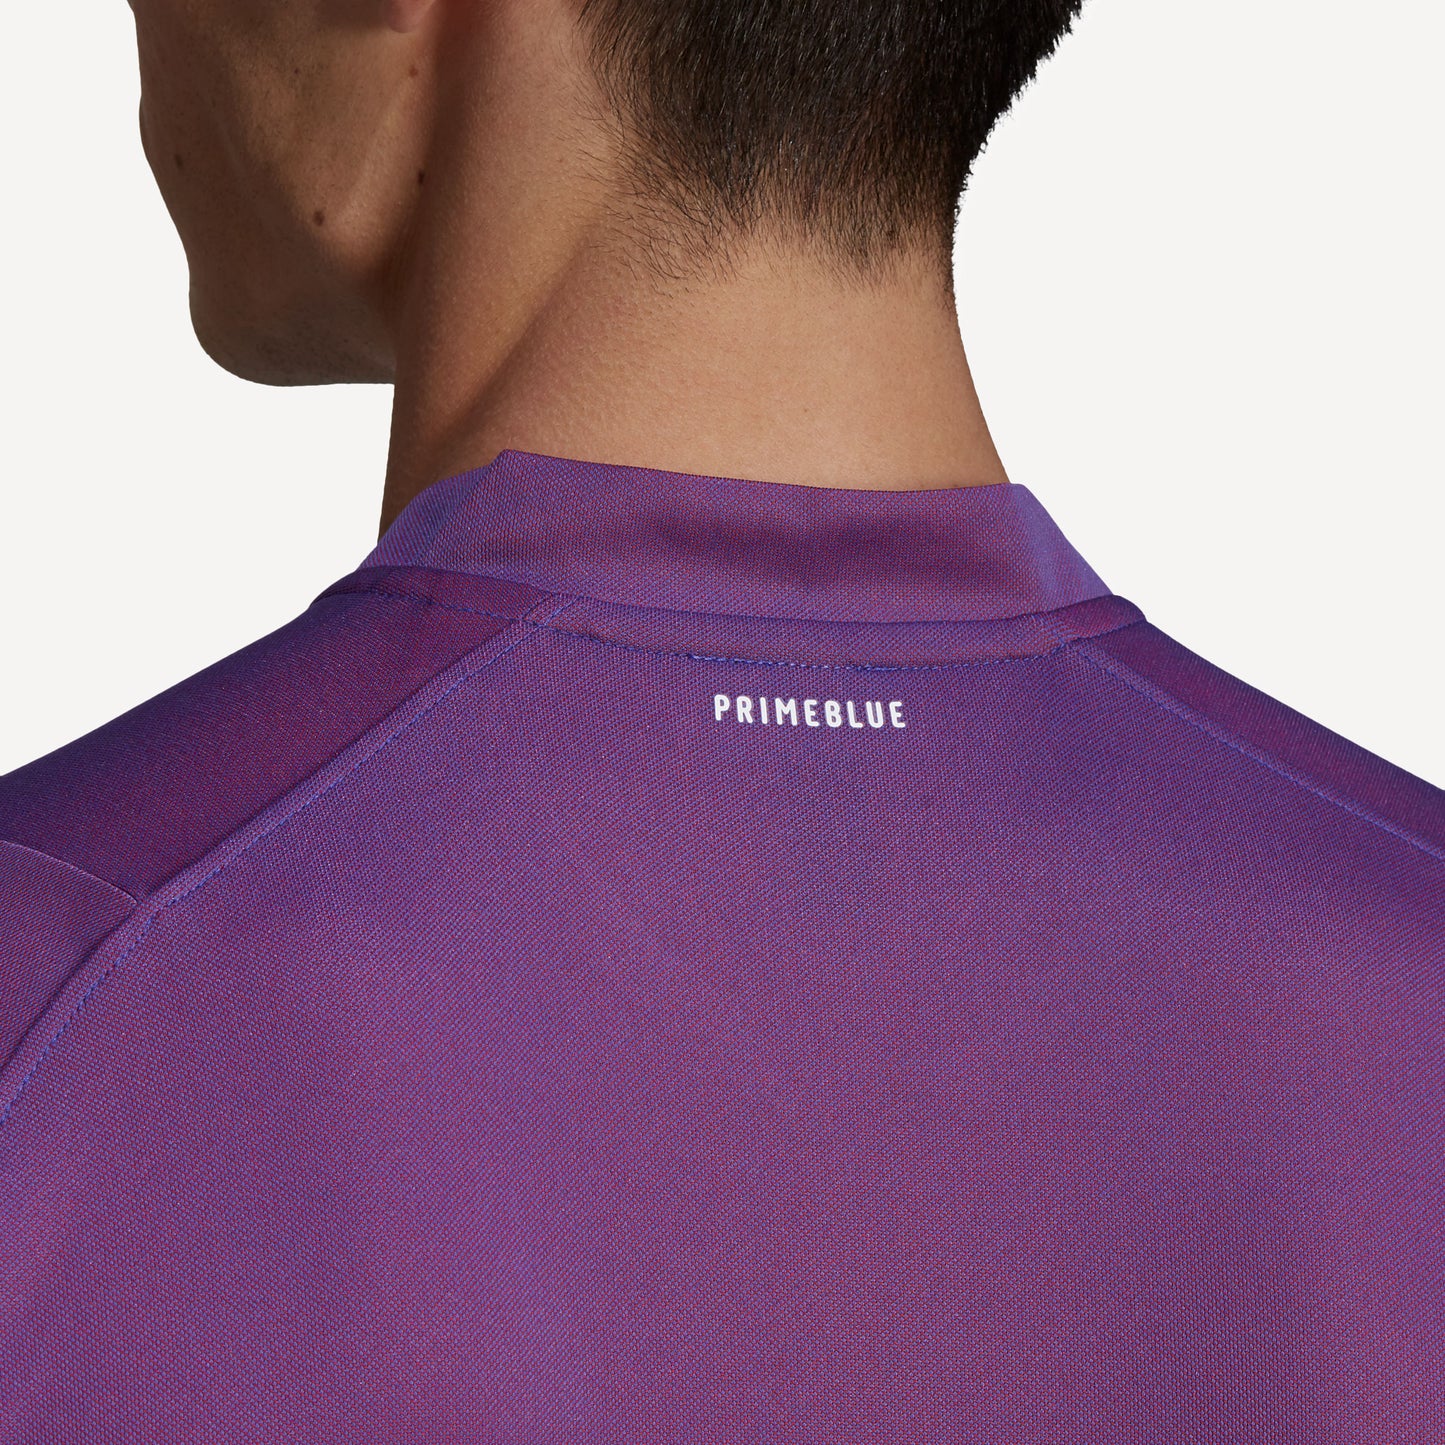 adidas Freelift Primeblue Men's Tennis Polo Purple (5)